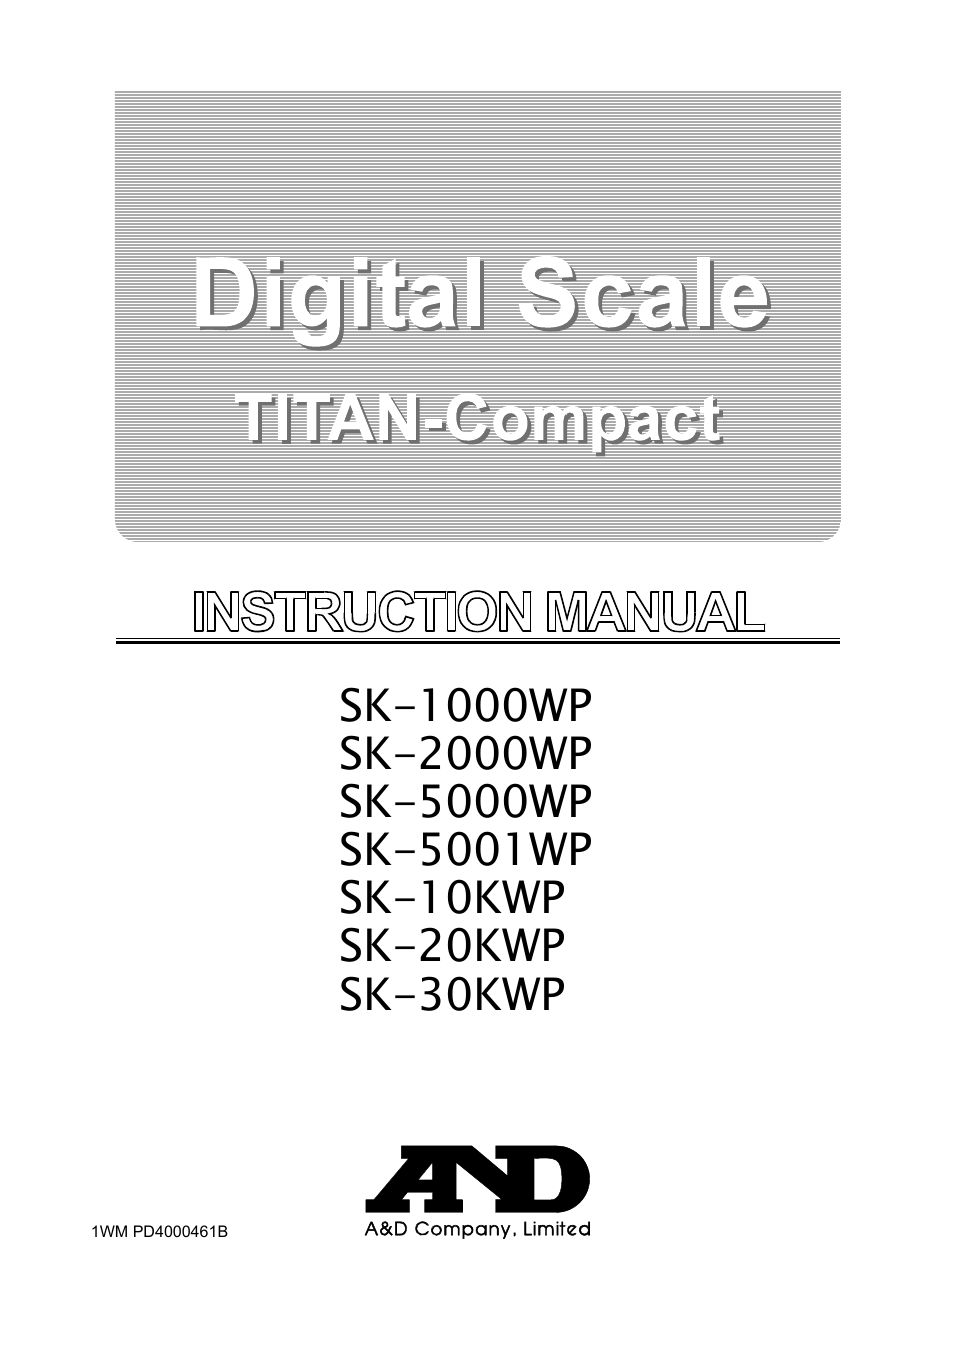 Digital Scale SK-20KWP